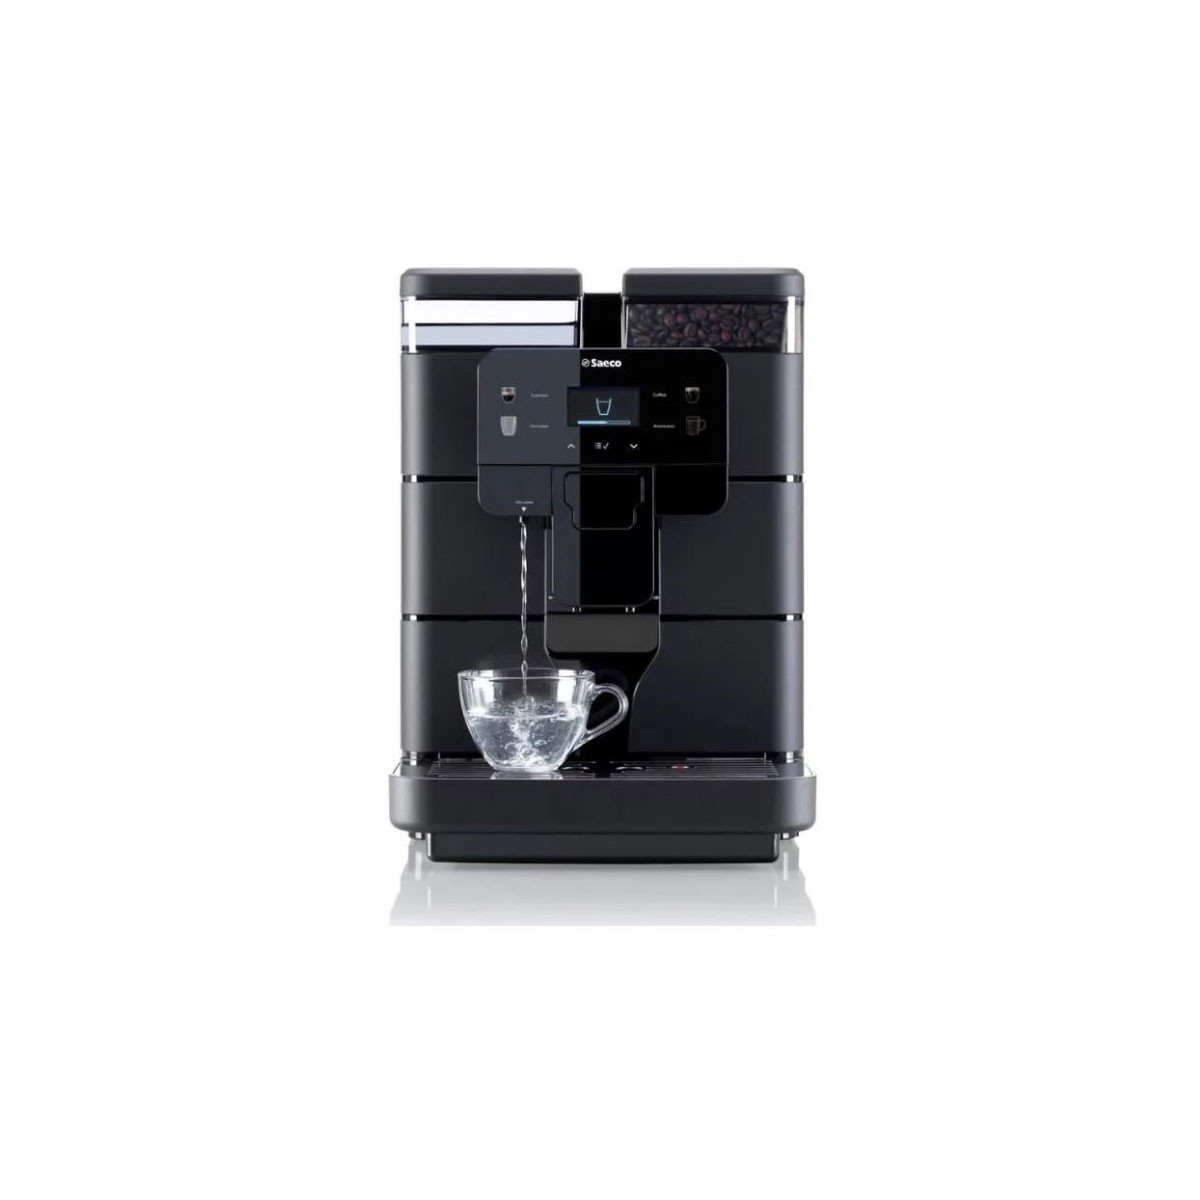 Machine à café Saeco Lirika Focus Black garantie 2 ans